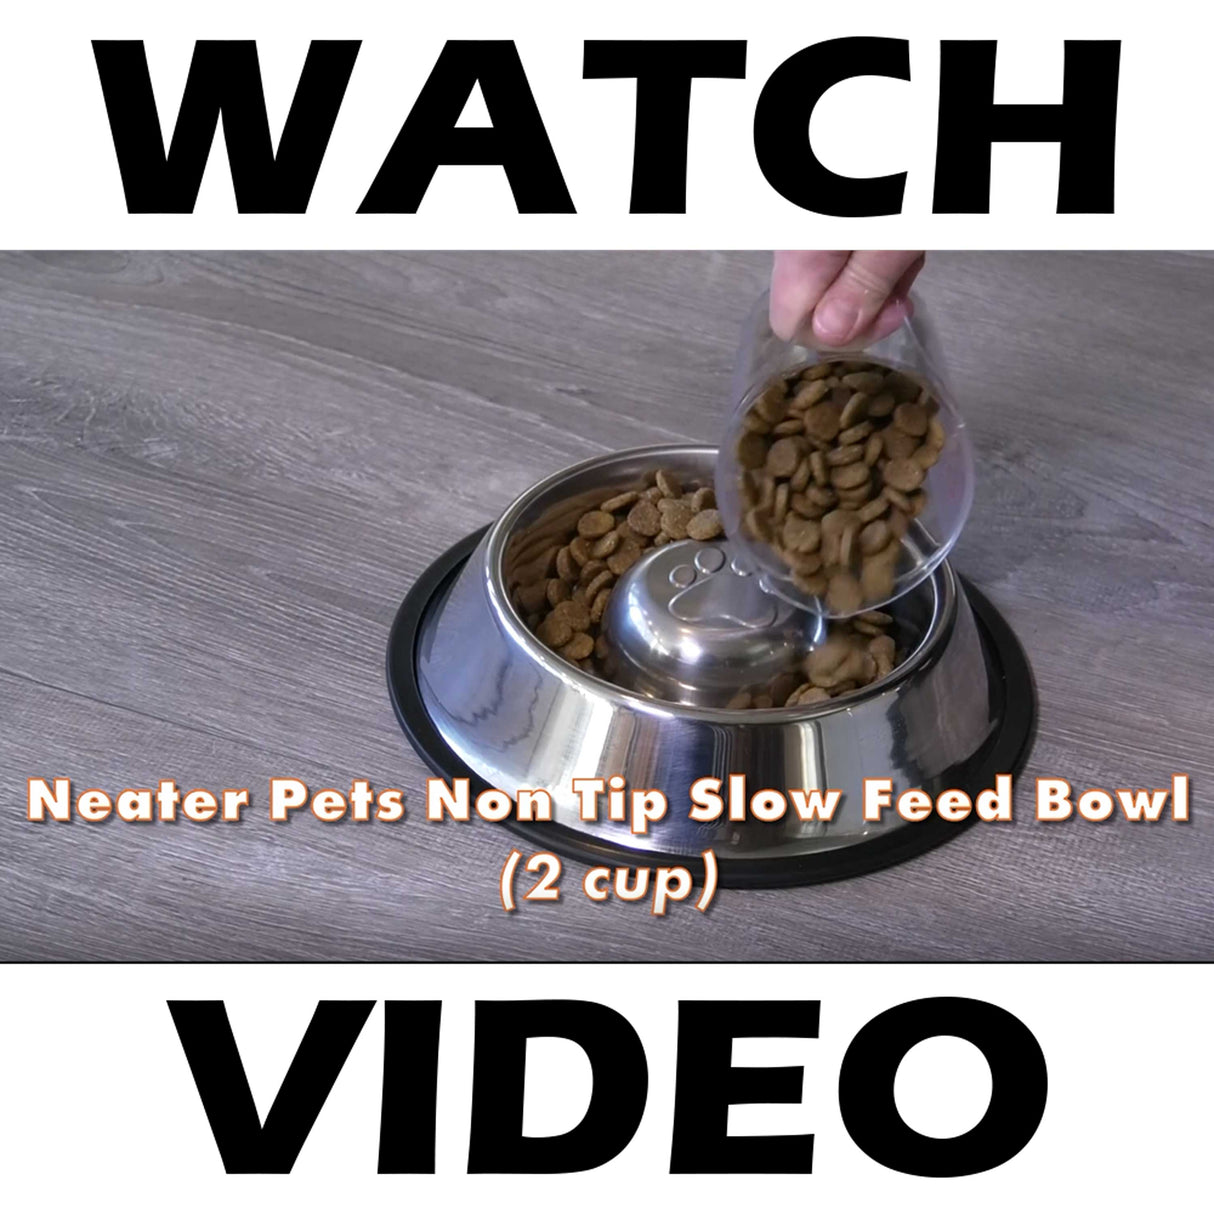 Medium Non-Tip Slow Feed Bowl video